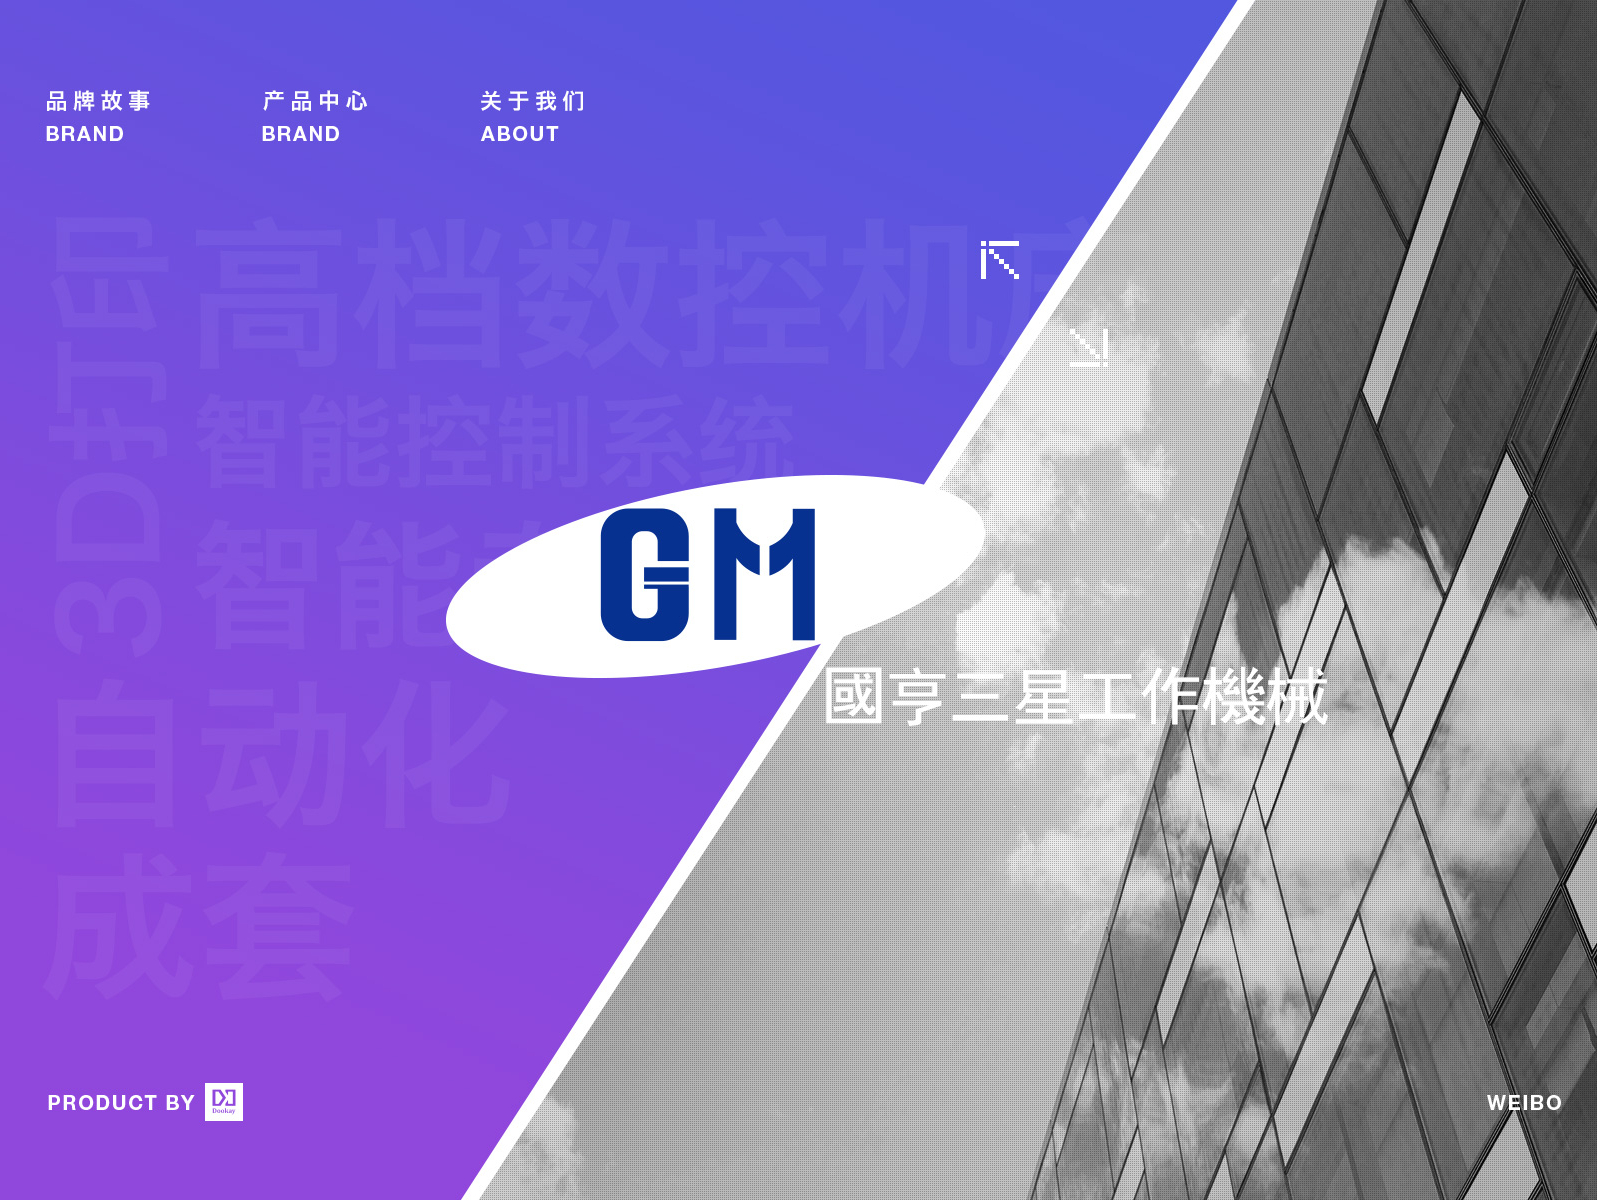 GMM TV - The One Enterprise